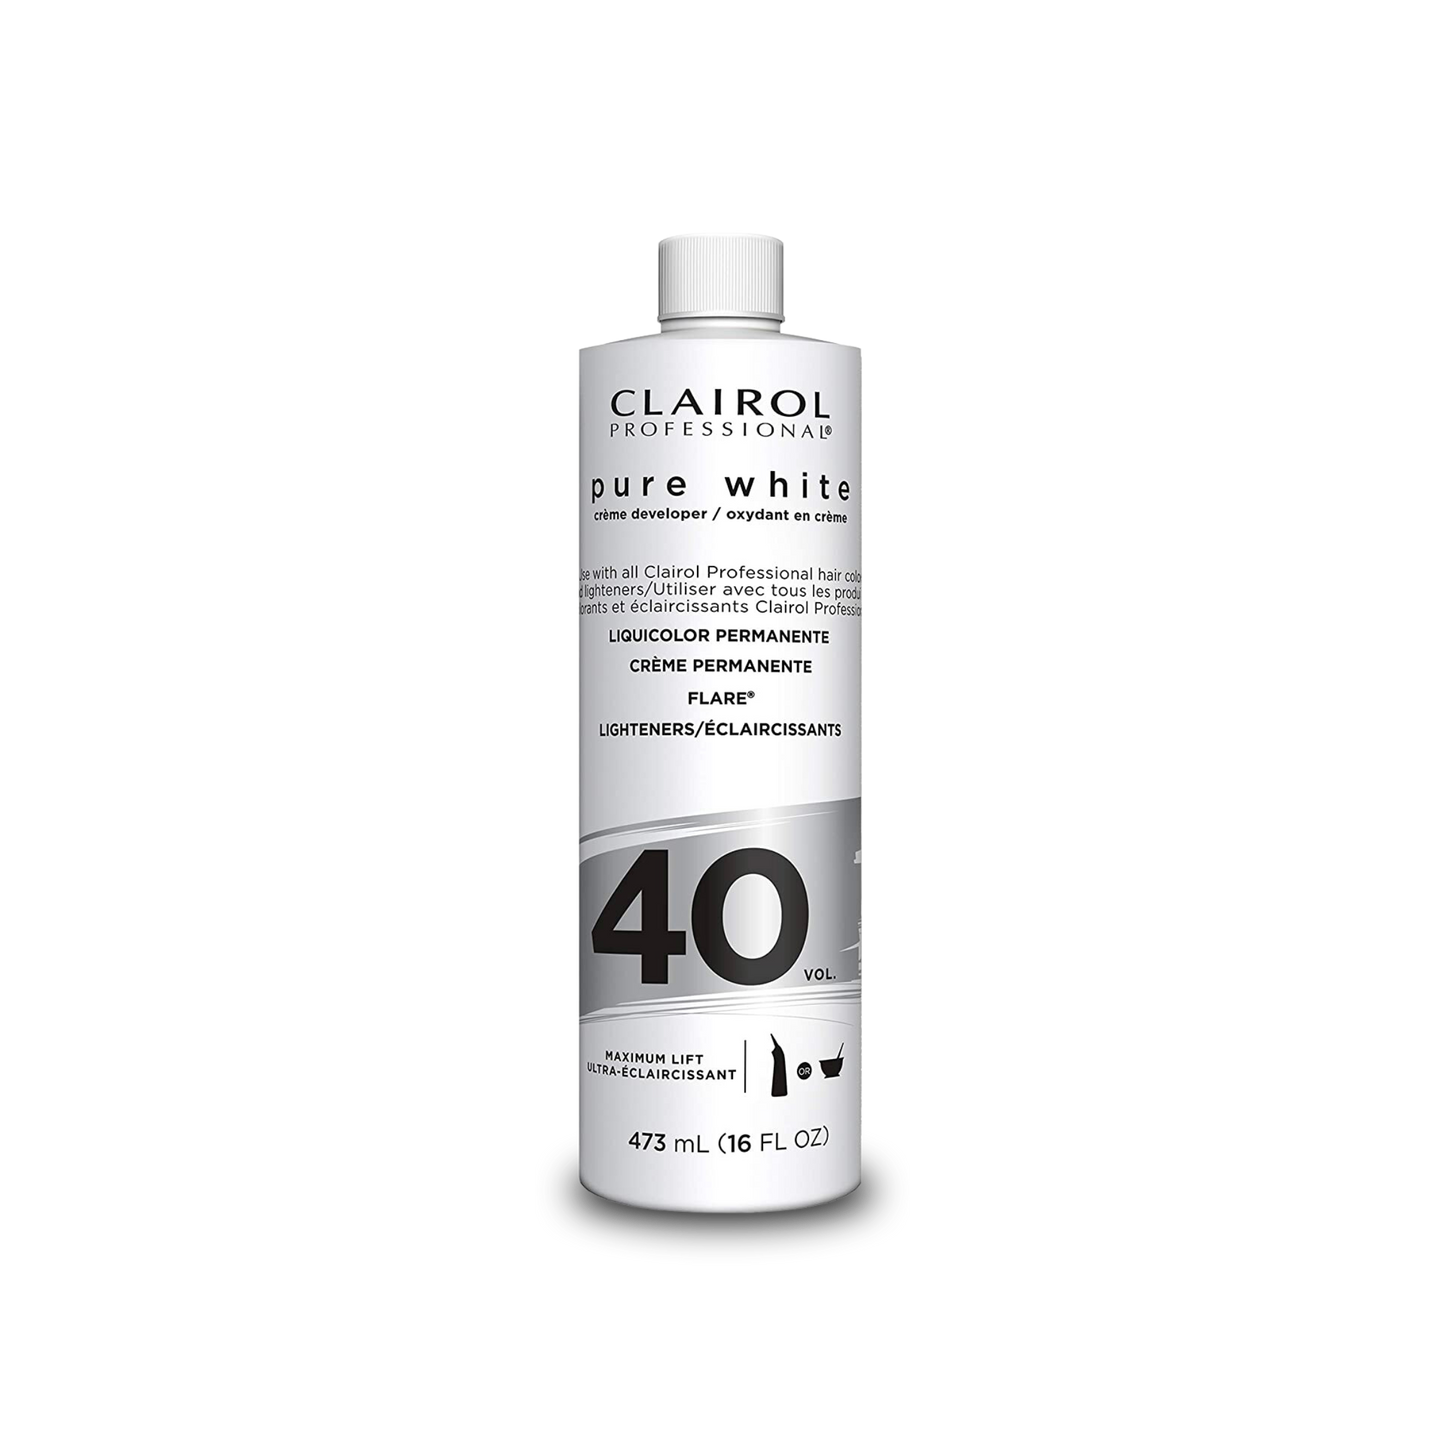 Clairol Pure White 40 Volume Developer